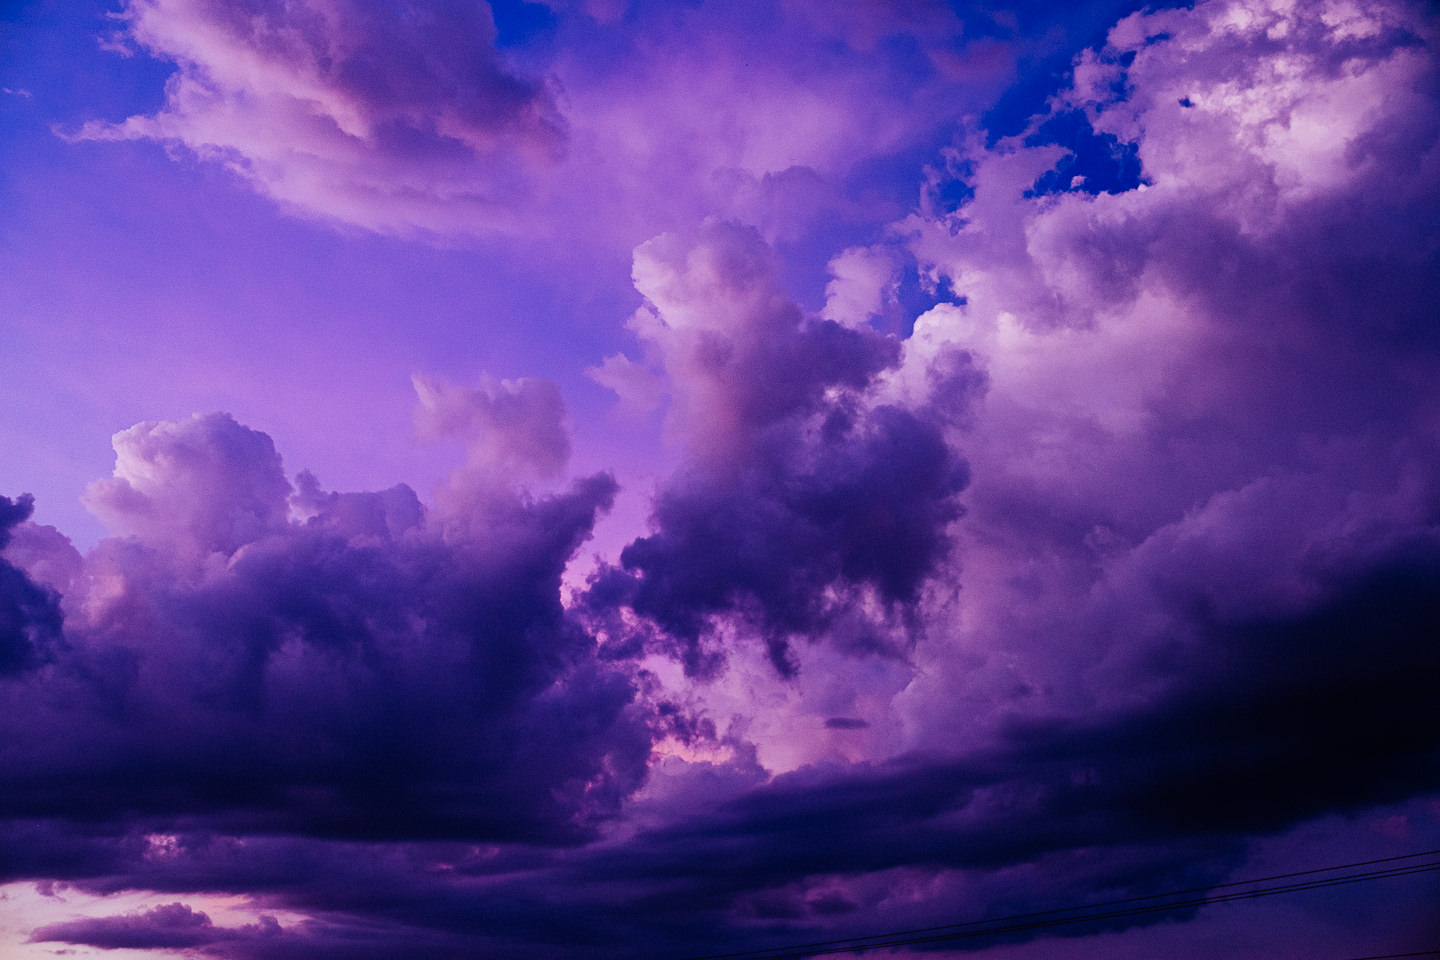 Purple sky with dark clouds